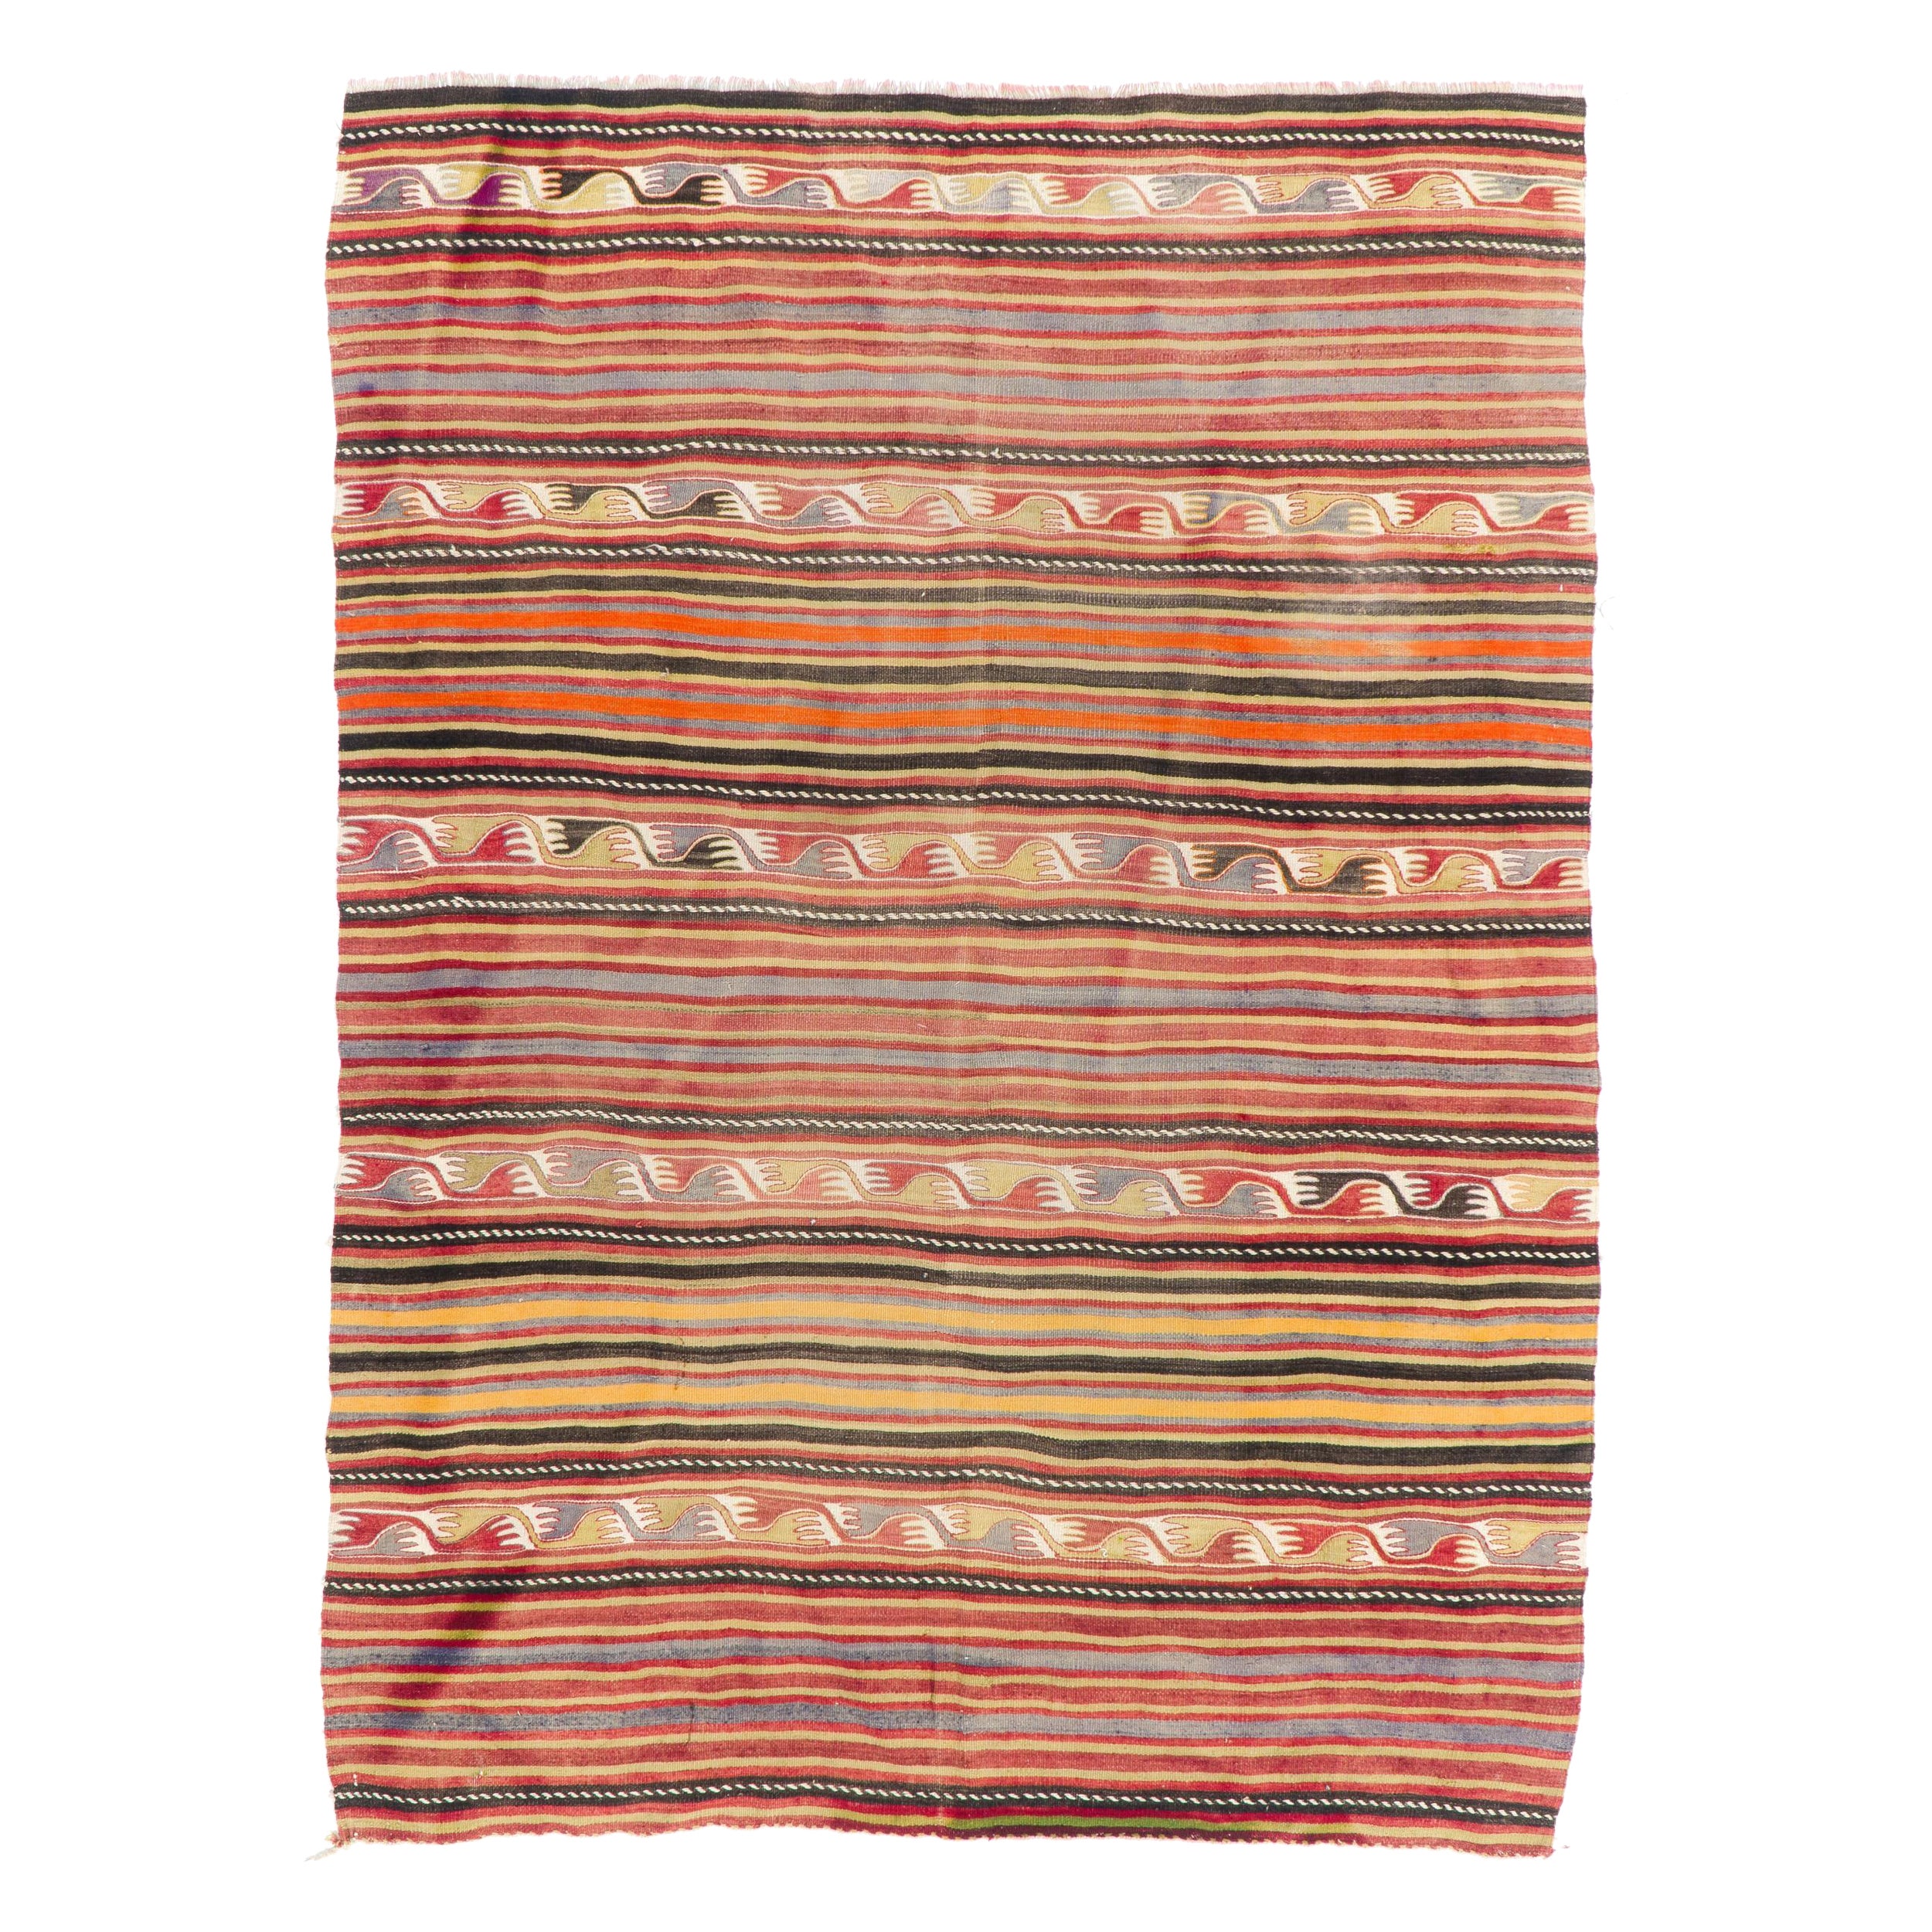 5.8x7.8 Ft Vintage Striped Pattern Turkish Kilim Rug. Flat-Weave Wool Carpet For Sale